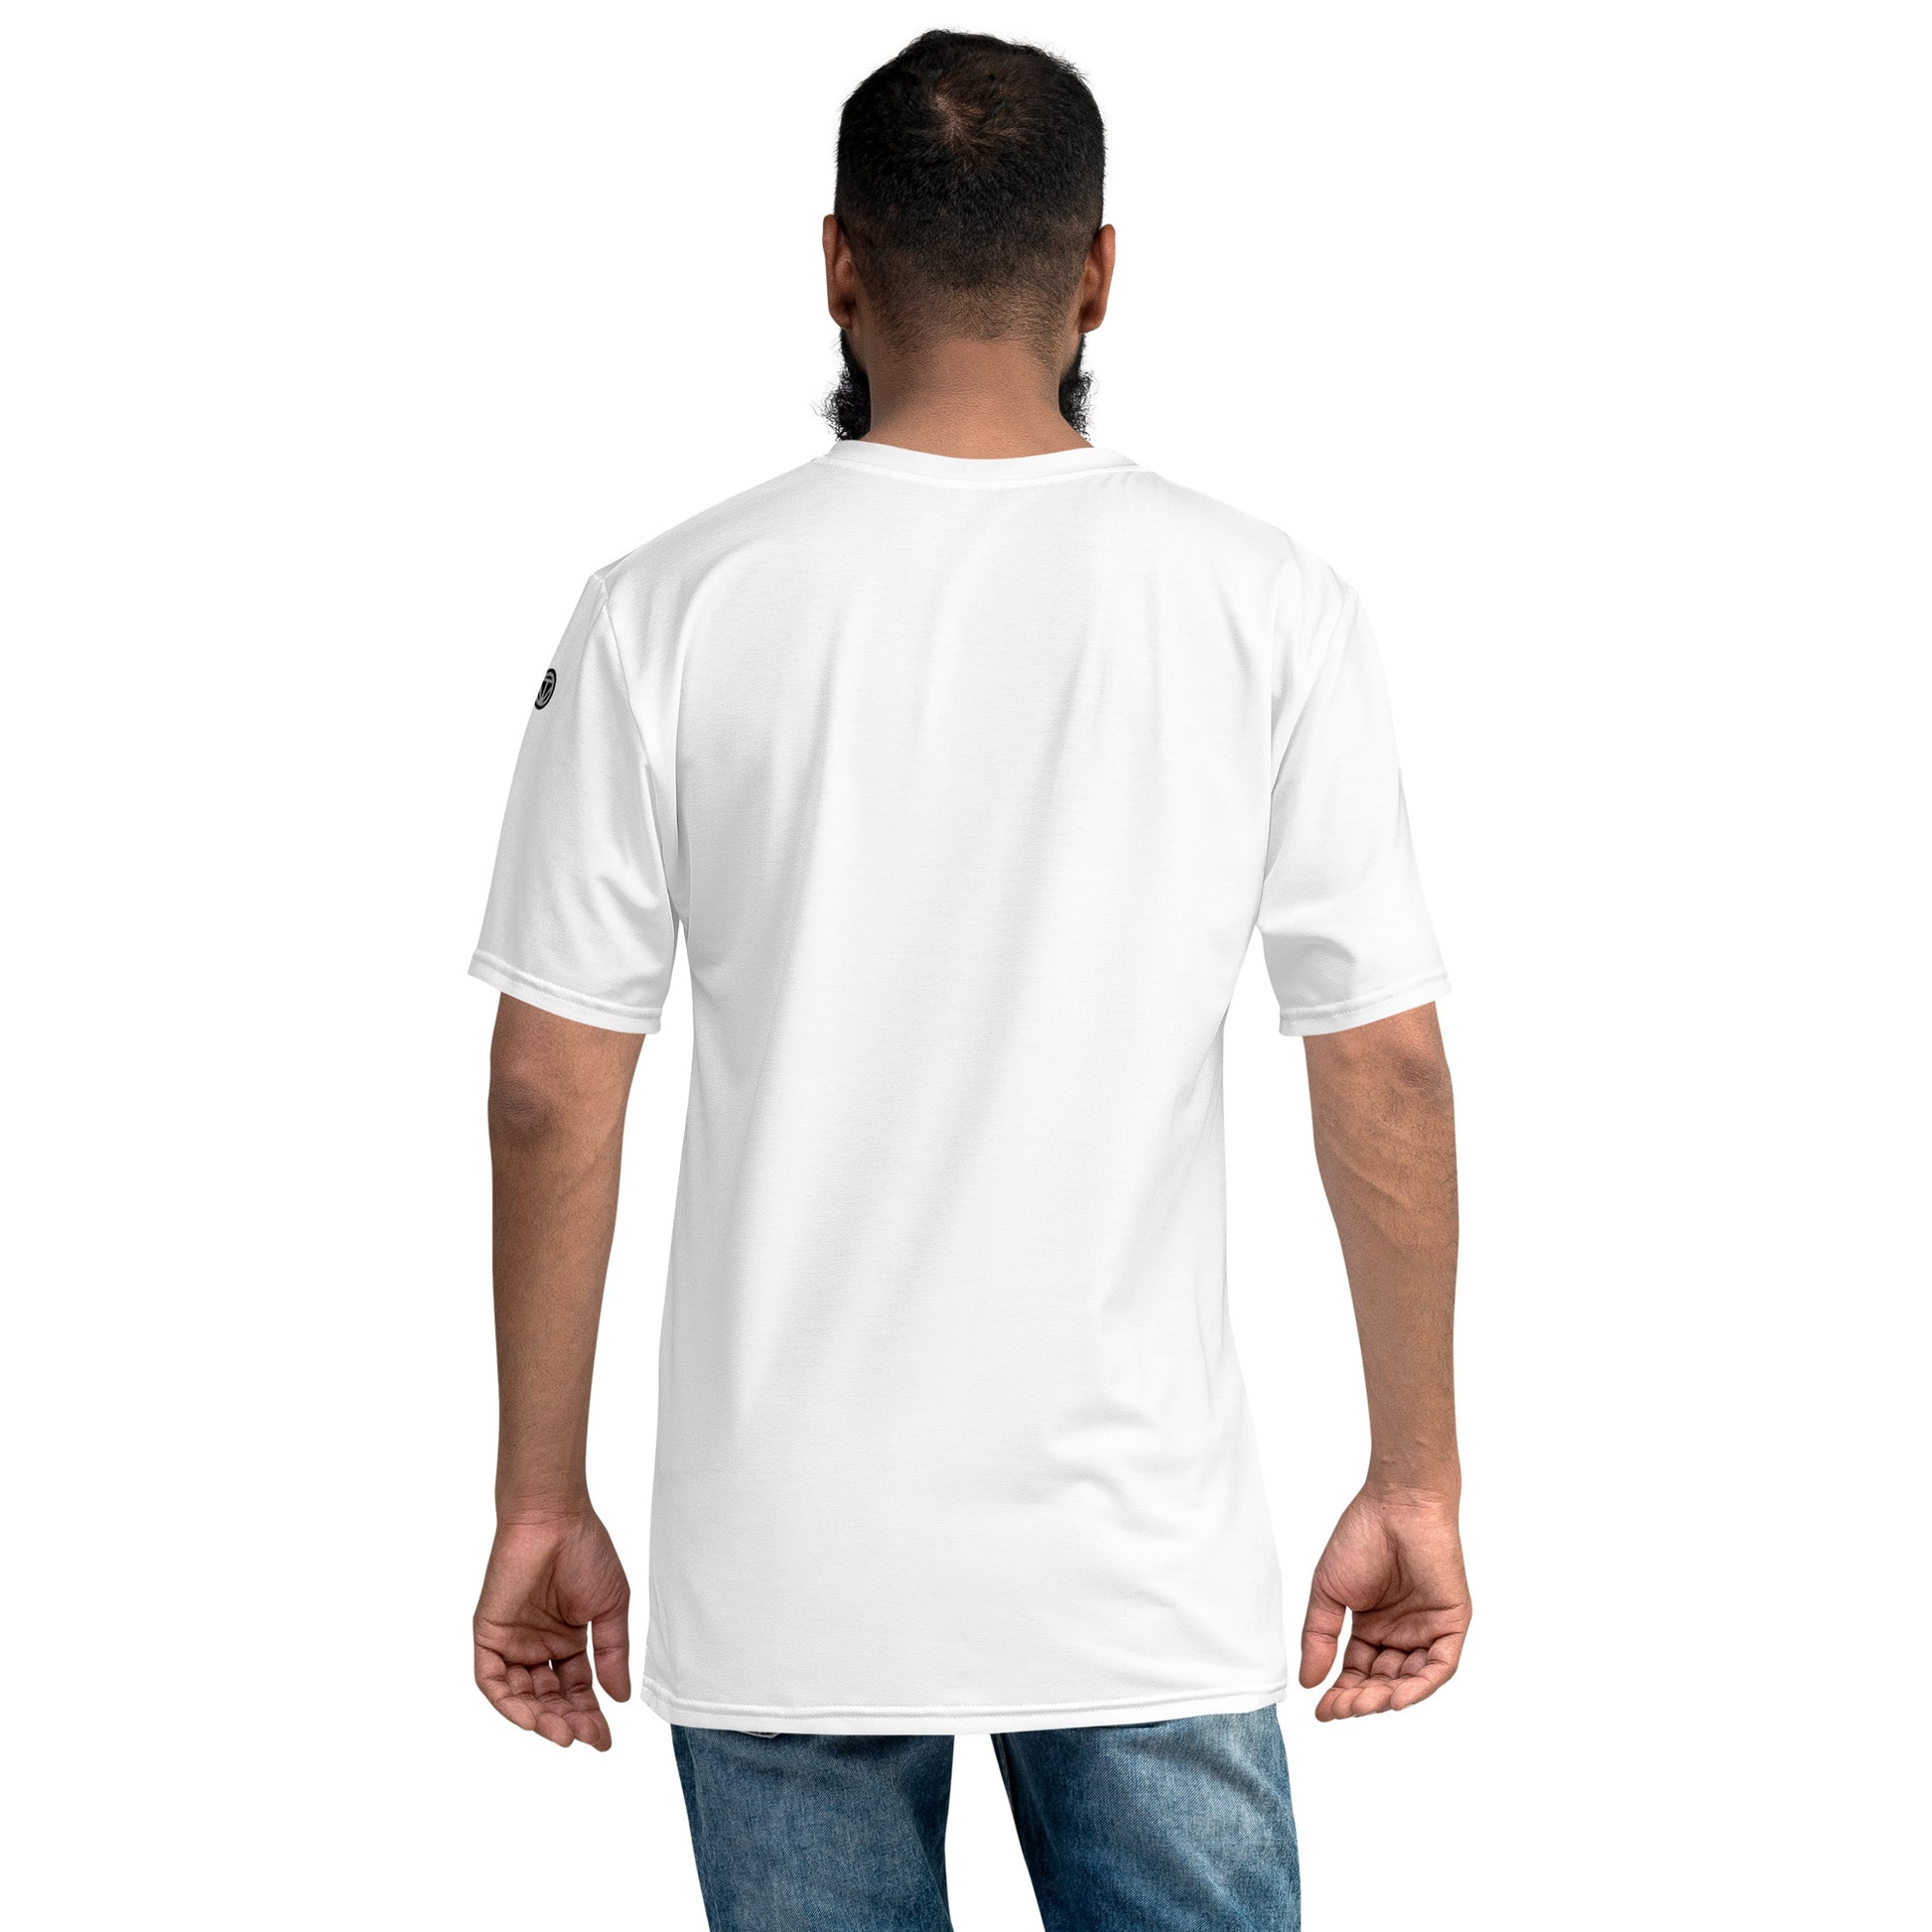 TIME OF VIBES - Premium Men's T-Shirt VIBES (White/Nobel) - €49.00